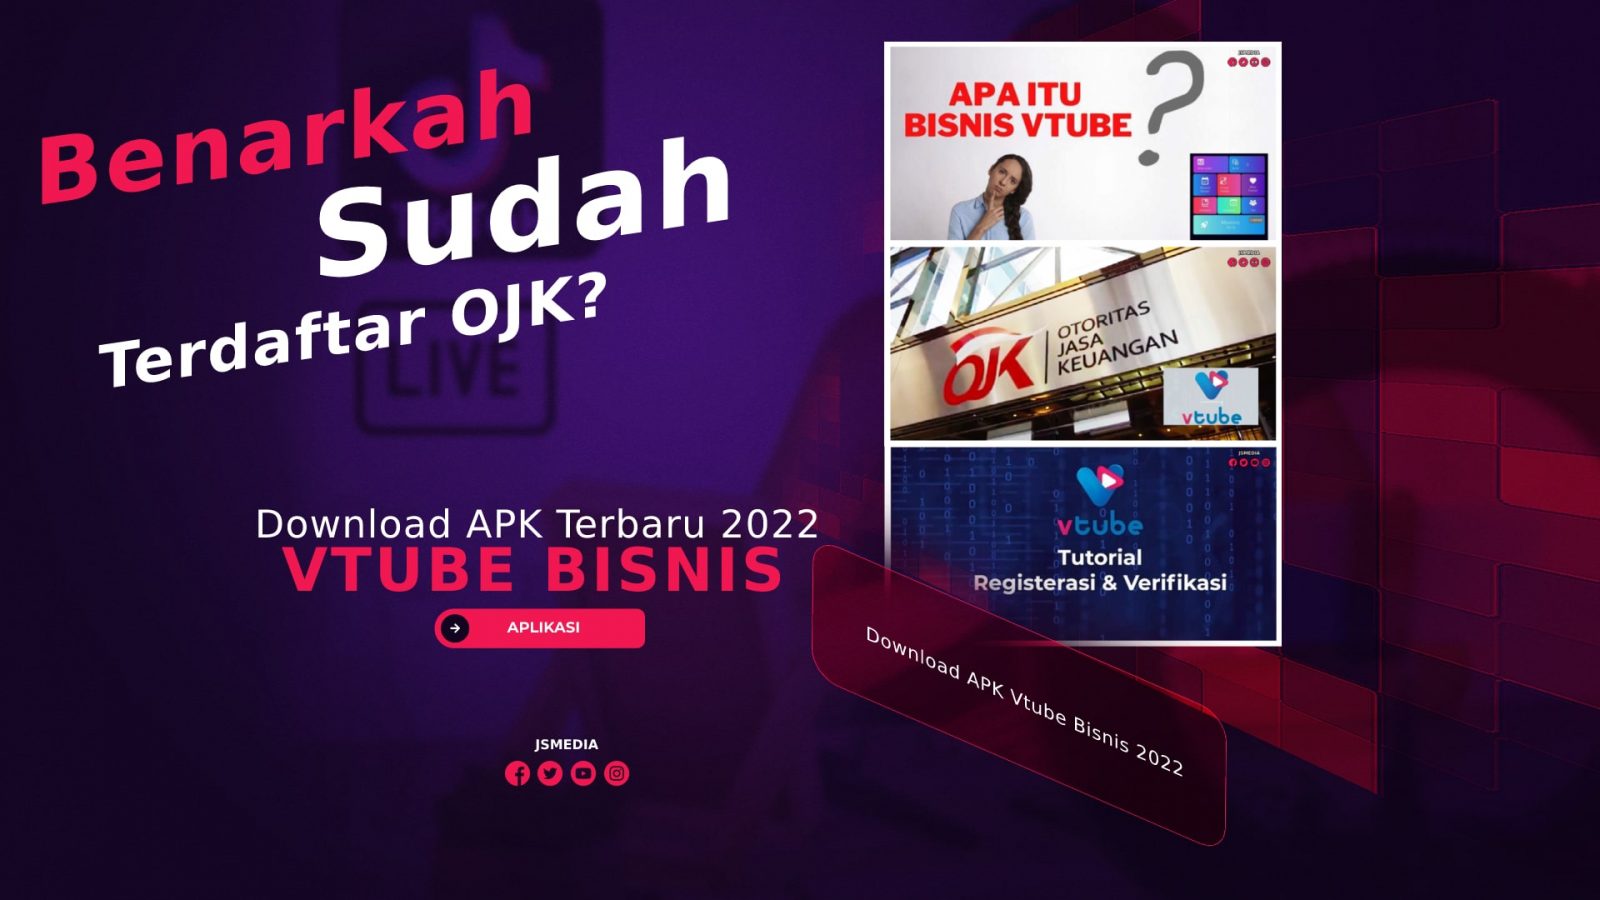 Download APK Vtube Bisnis 2022, Sudah Terdaftar OJK?